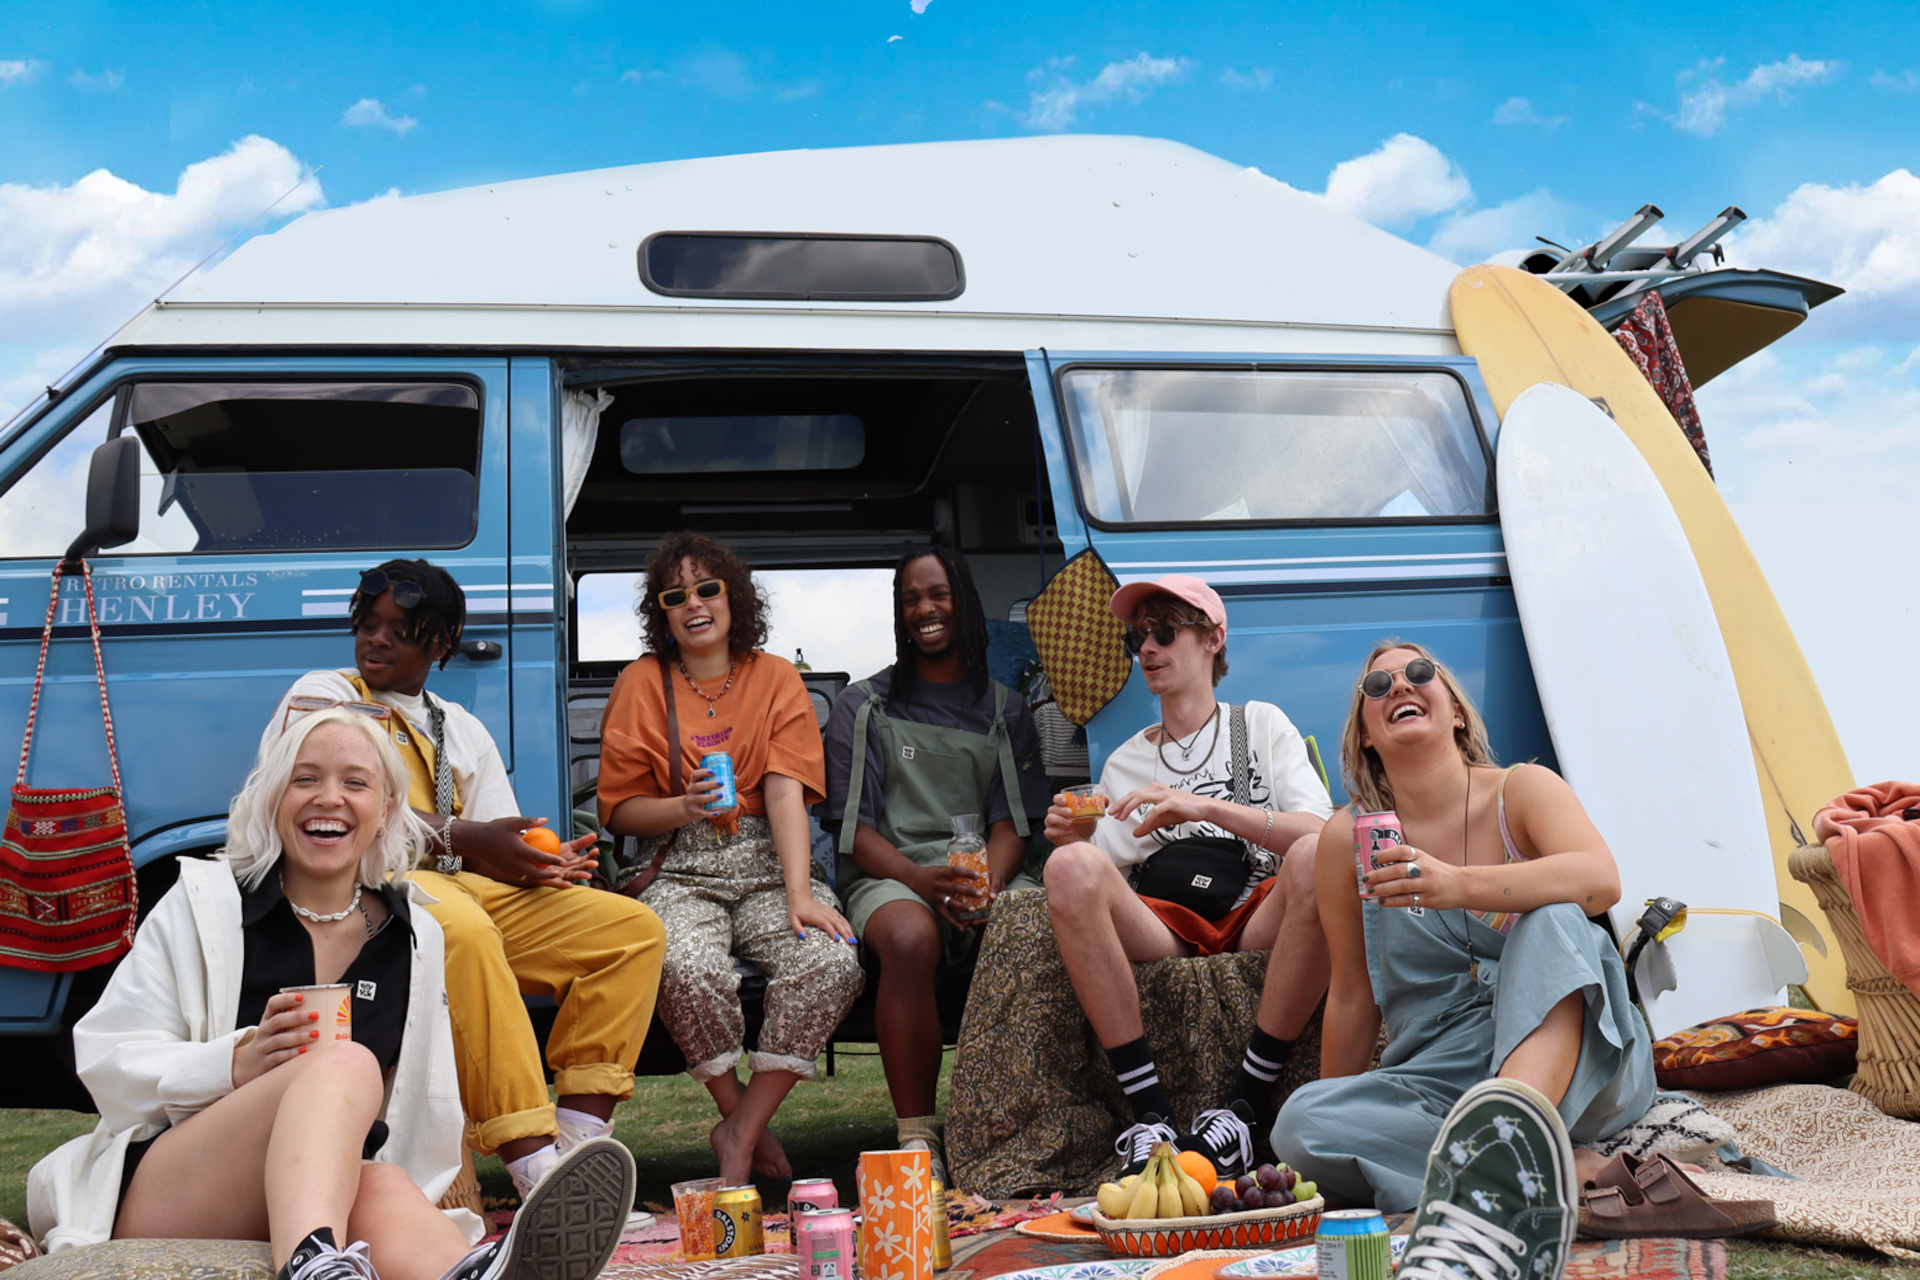 Young people in dungarees sat in front of camper van in summer